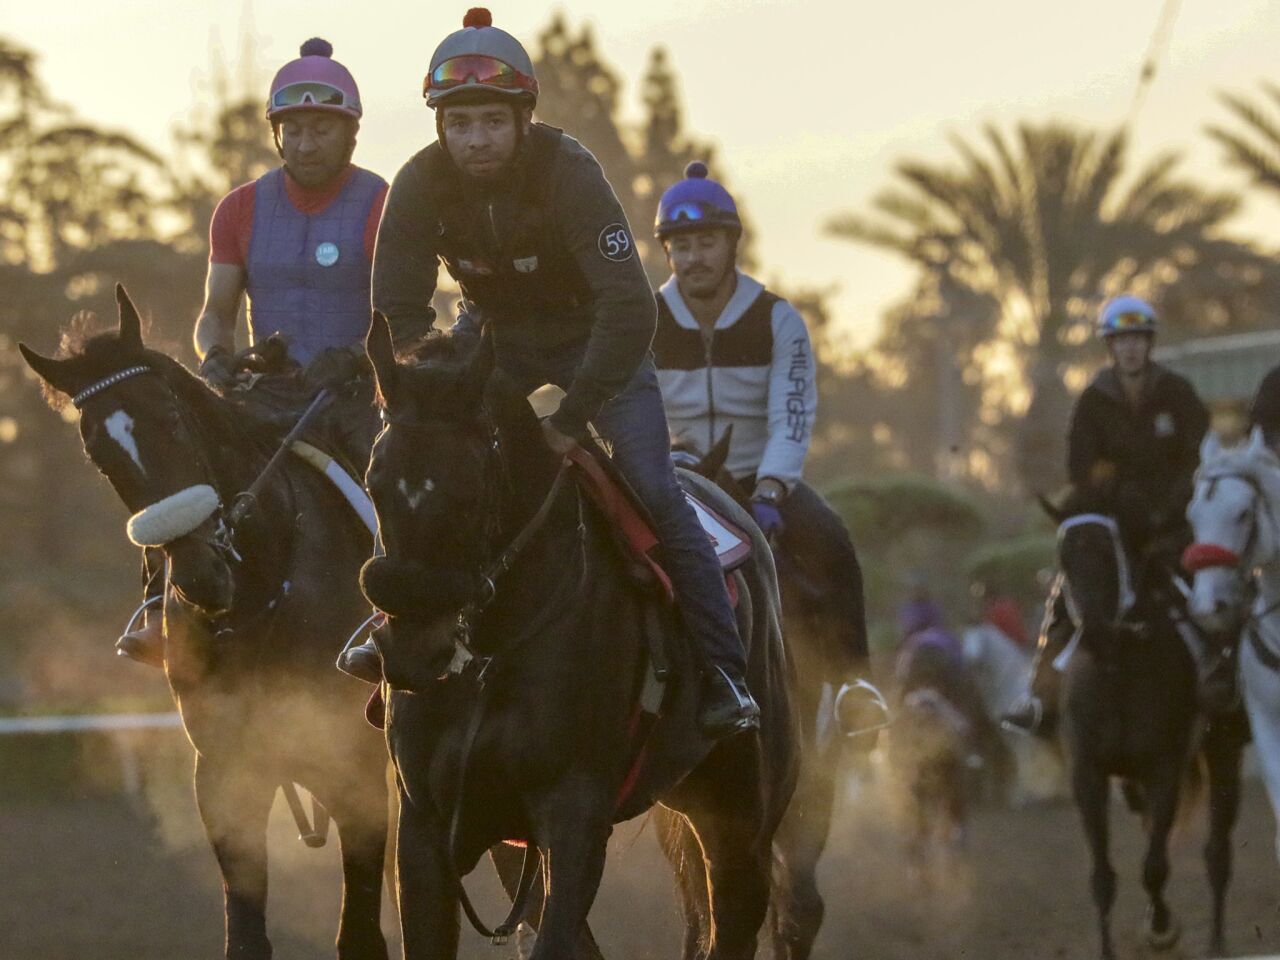 Horses go through early morning training as Santa Anita resumes racing on Friday.